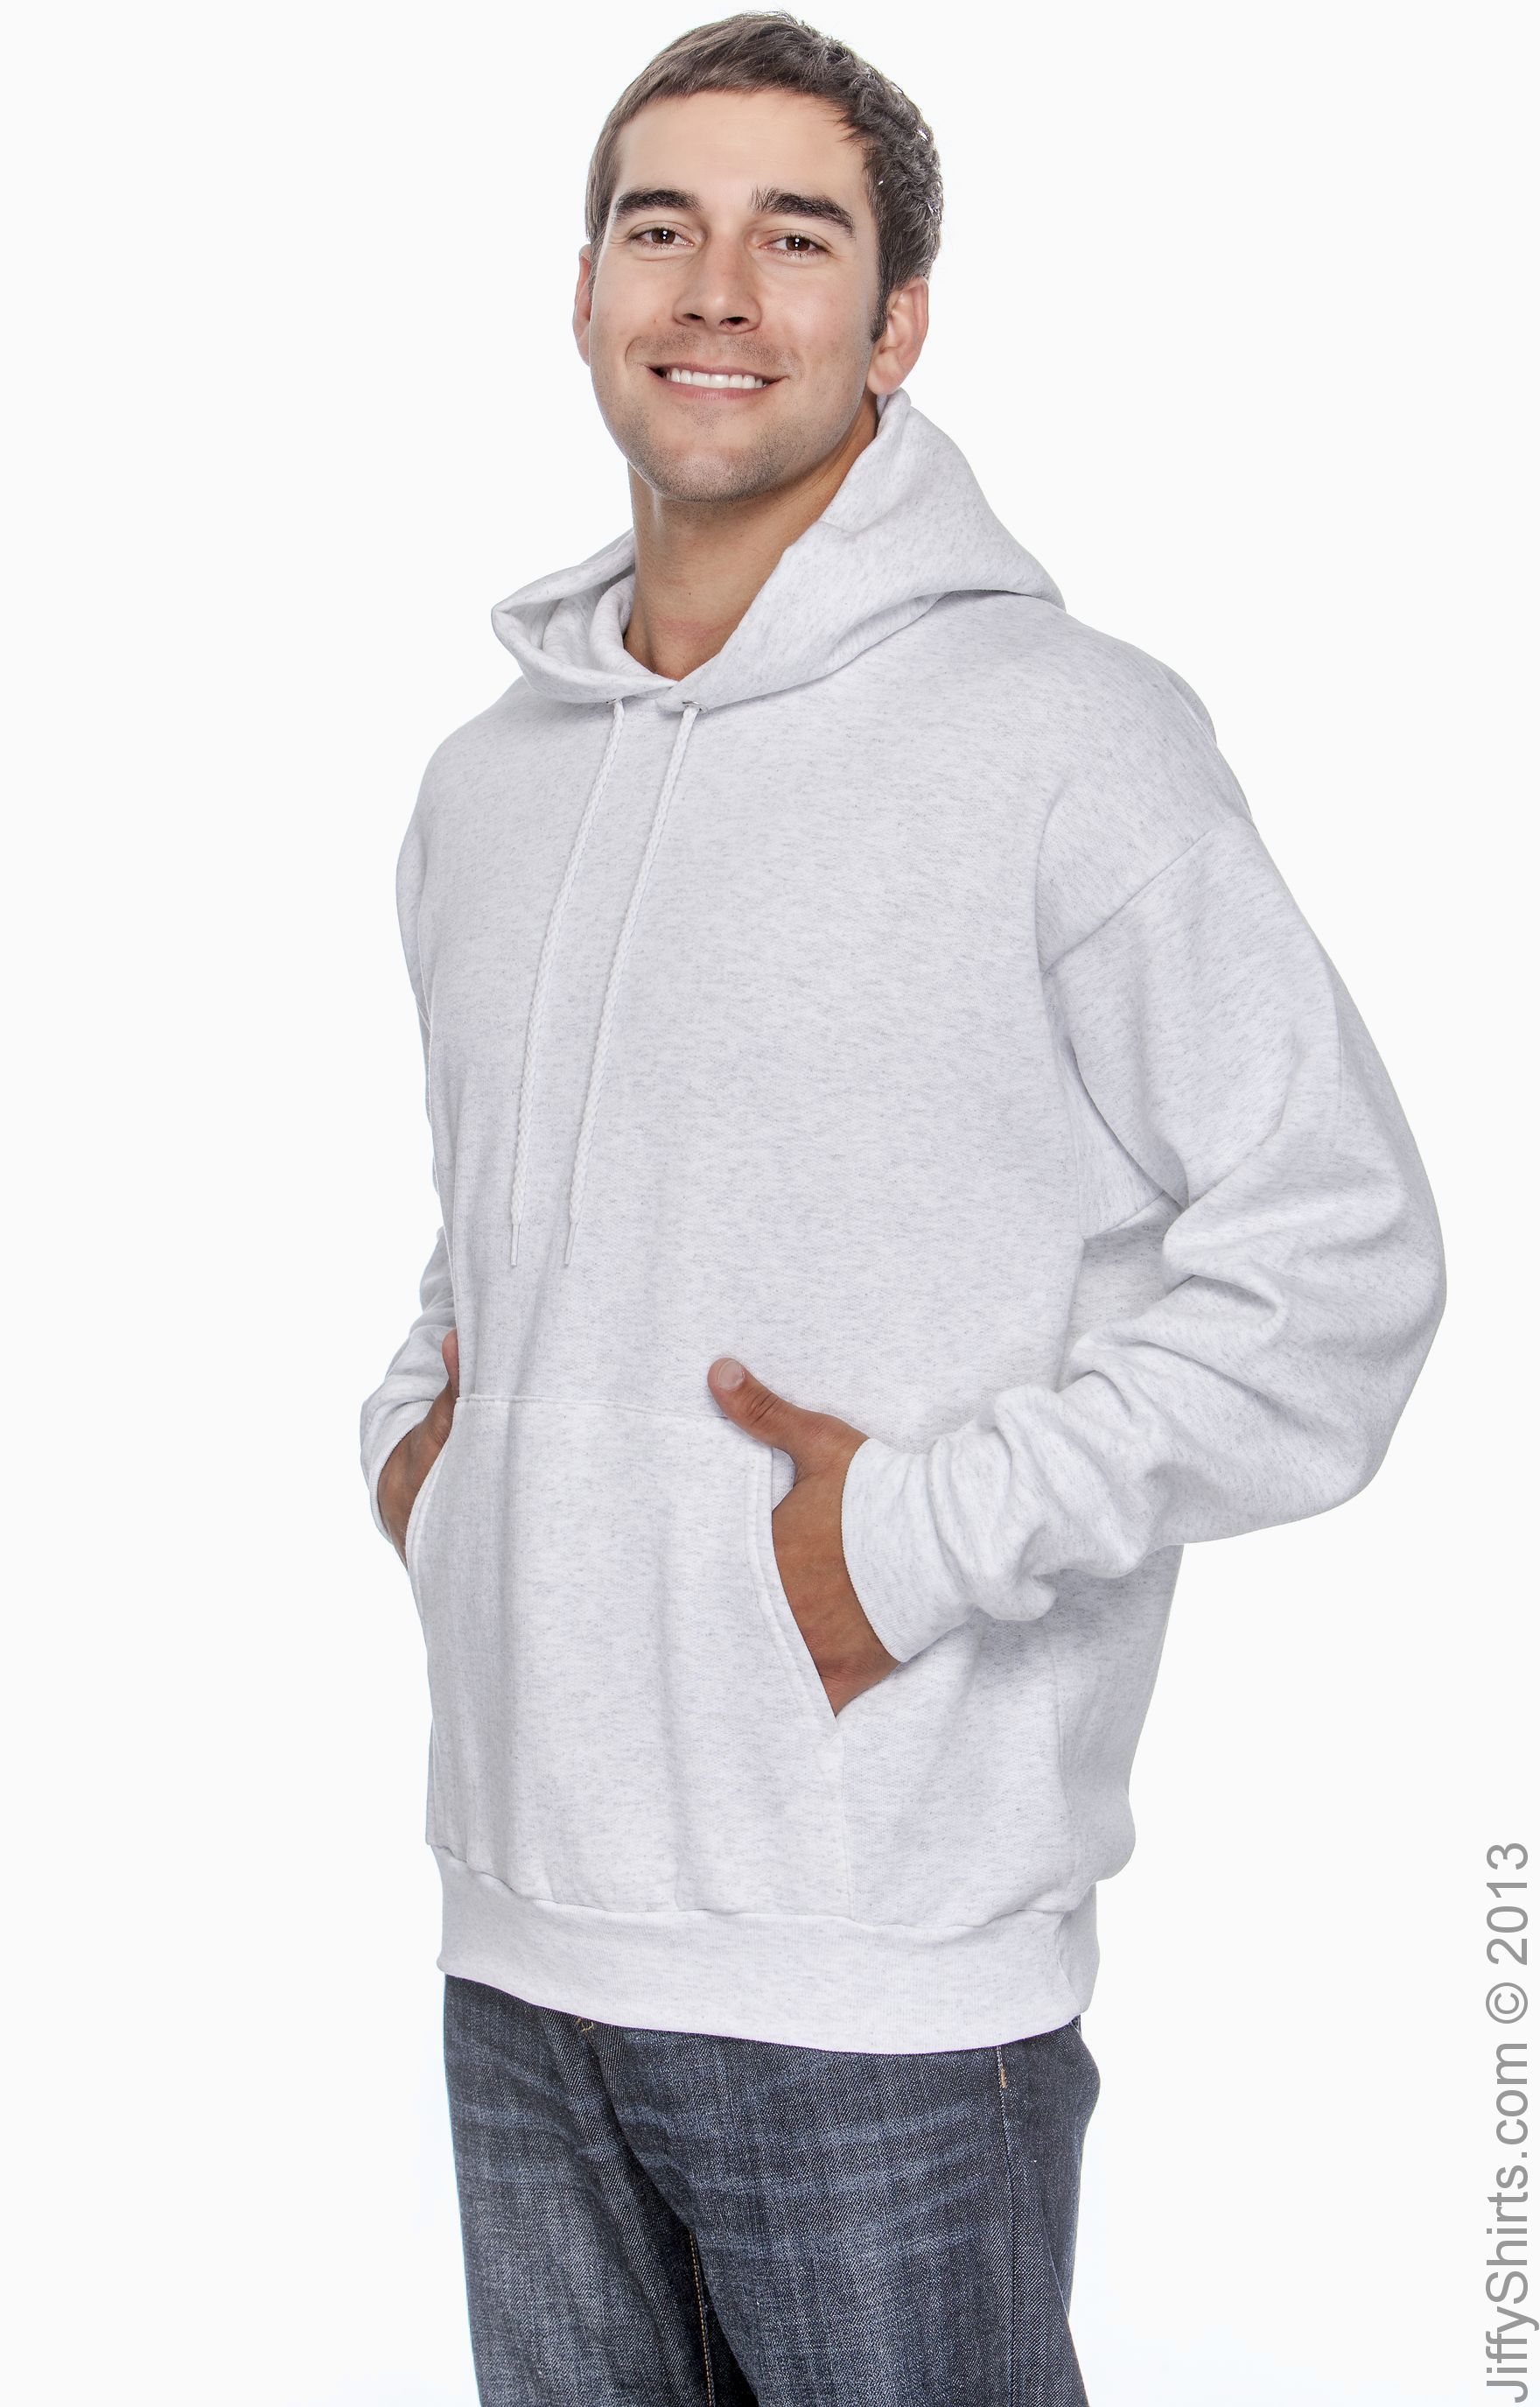 1 White Hanes P170 Mens EcoSmart Hooded Sweatshirt Medium 1 Pale Pink